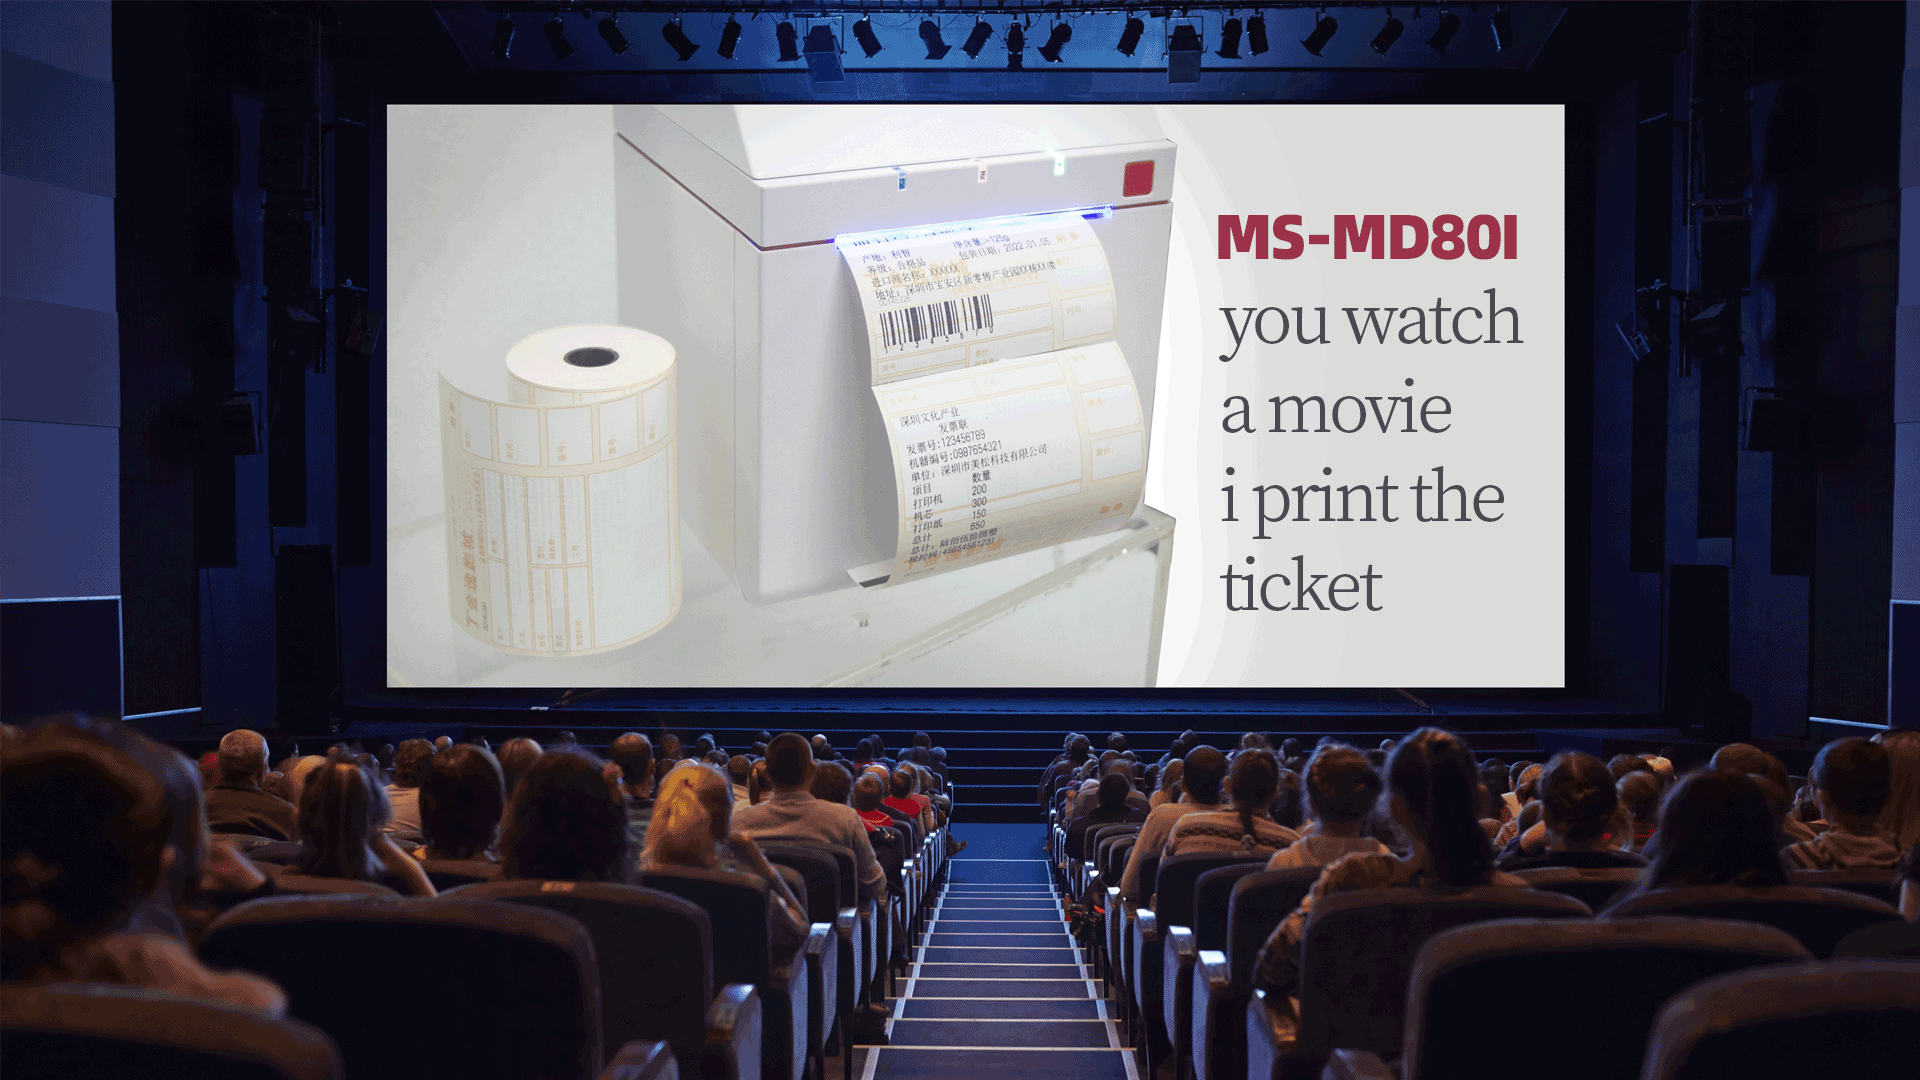 Masung cinema printer MS-MD80I special type movie ticket printing thermal ticket machine